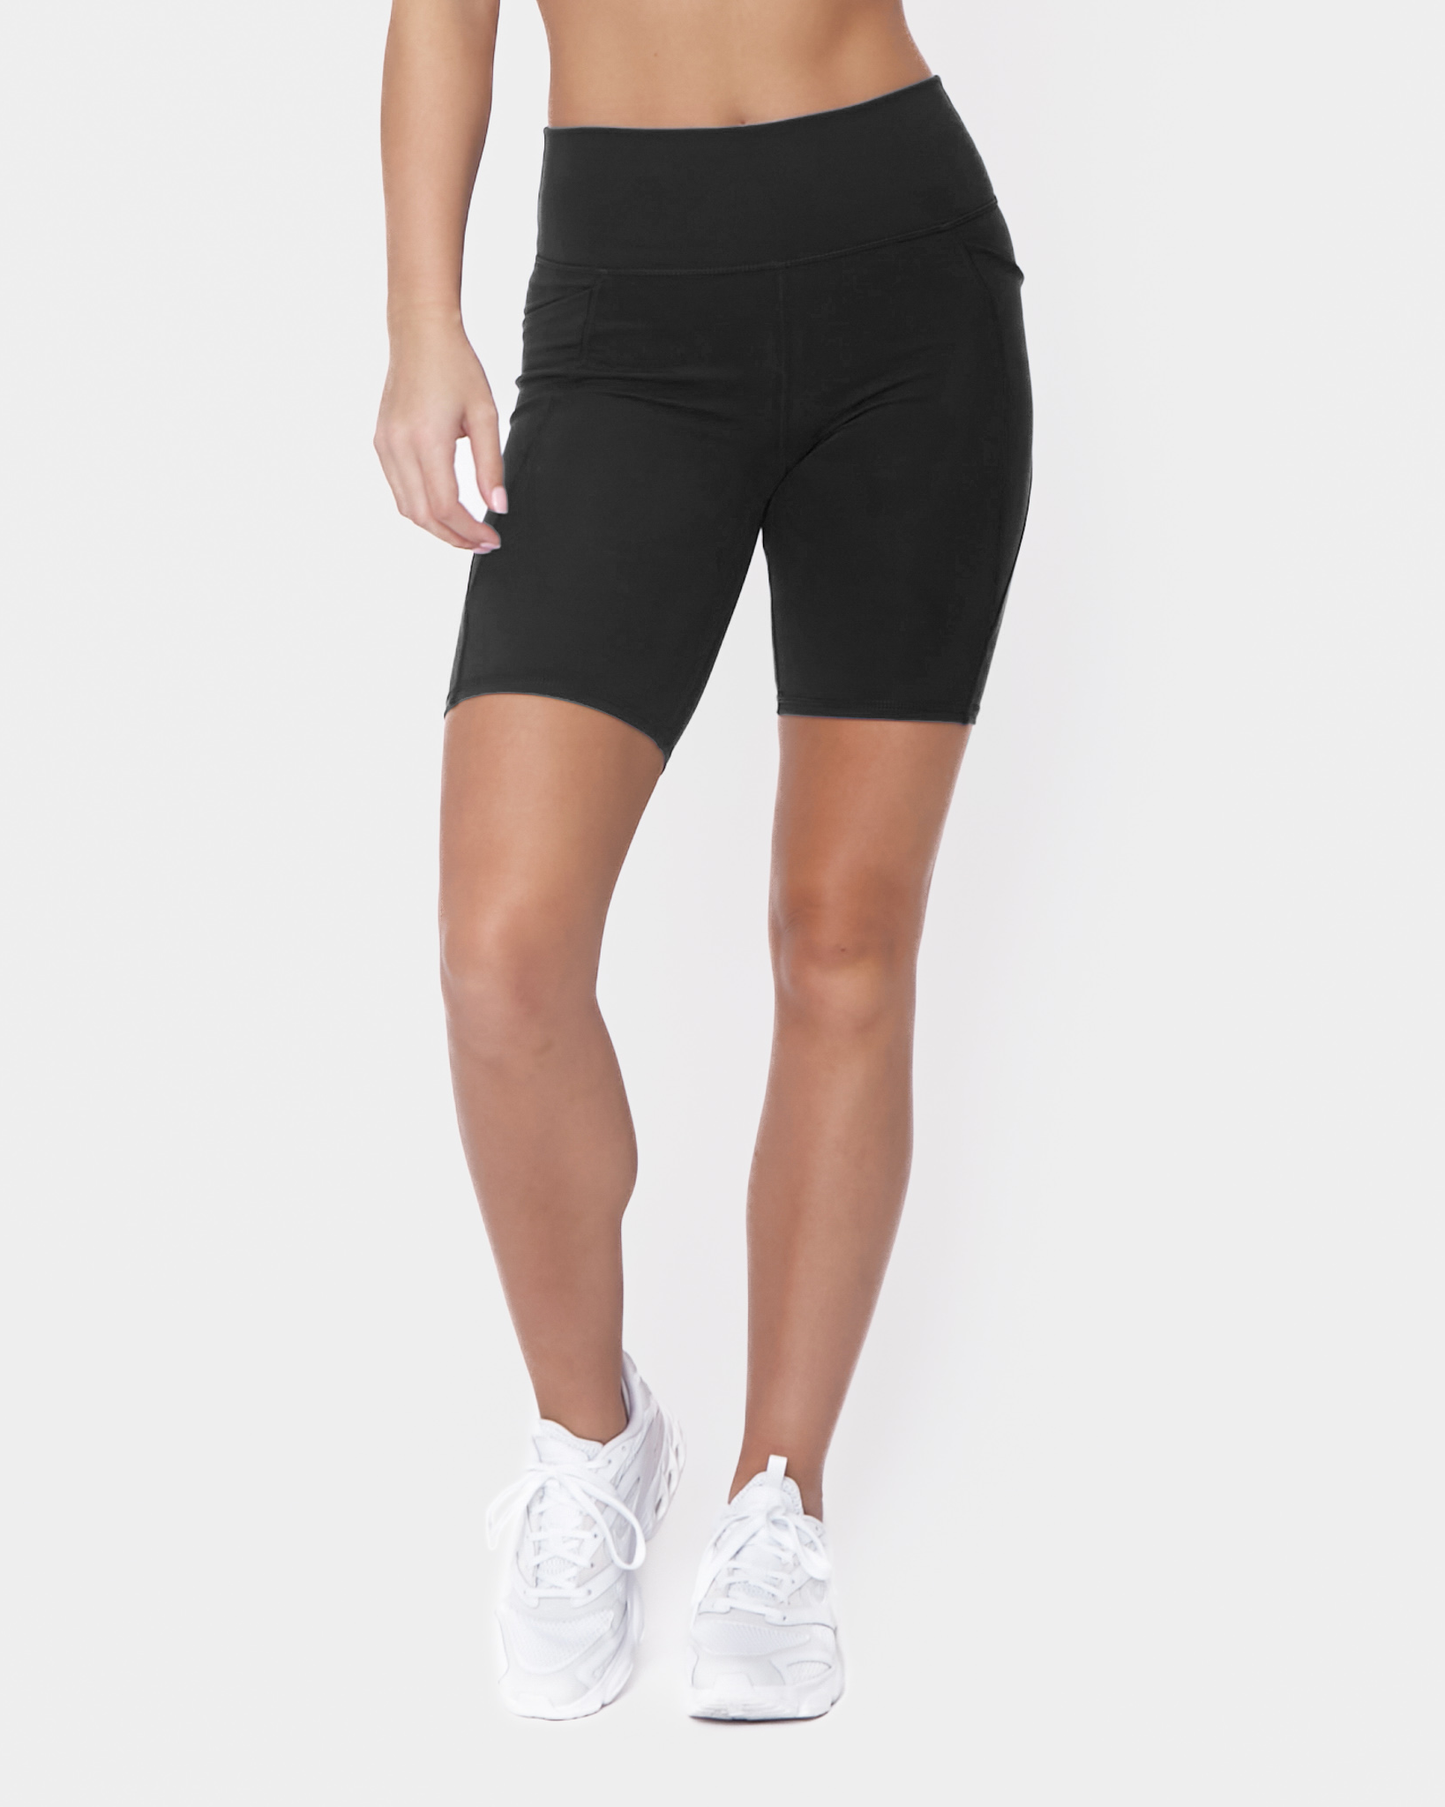 Senita Athletics Color Block Solid Black Athletic Shorts Size M